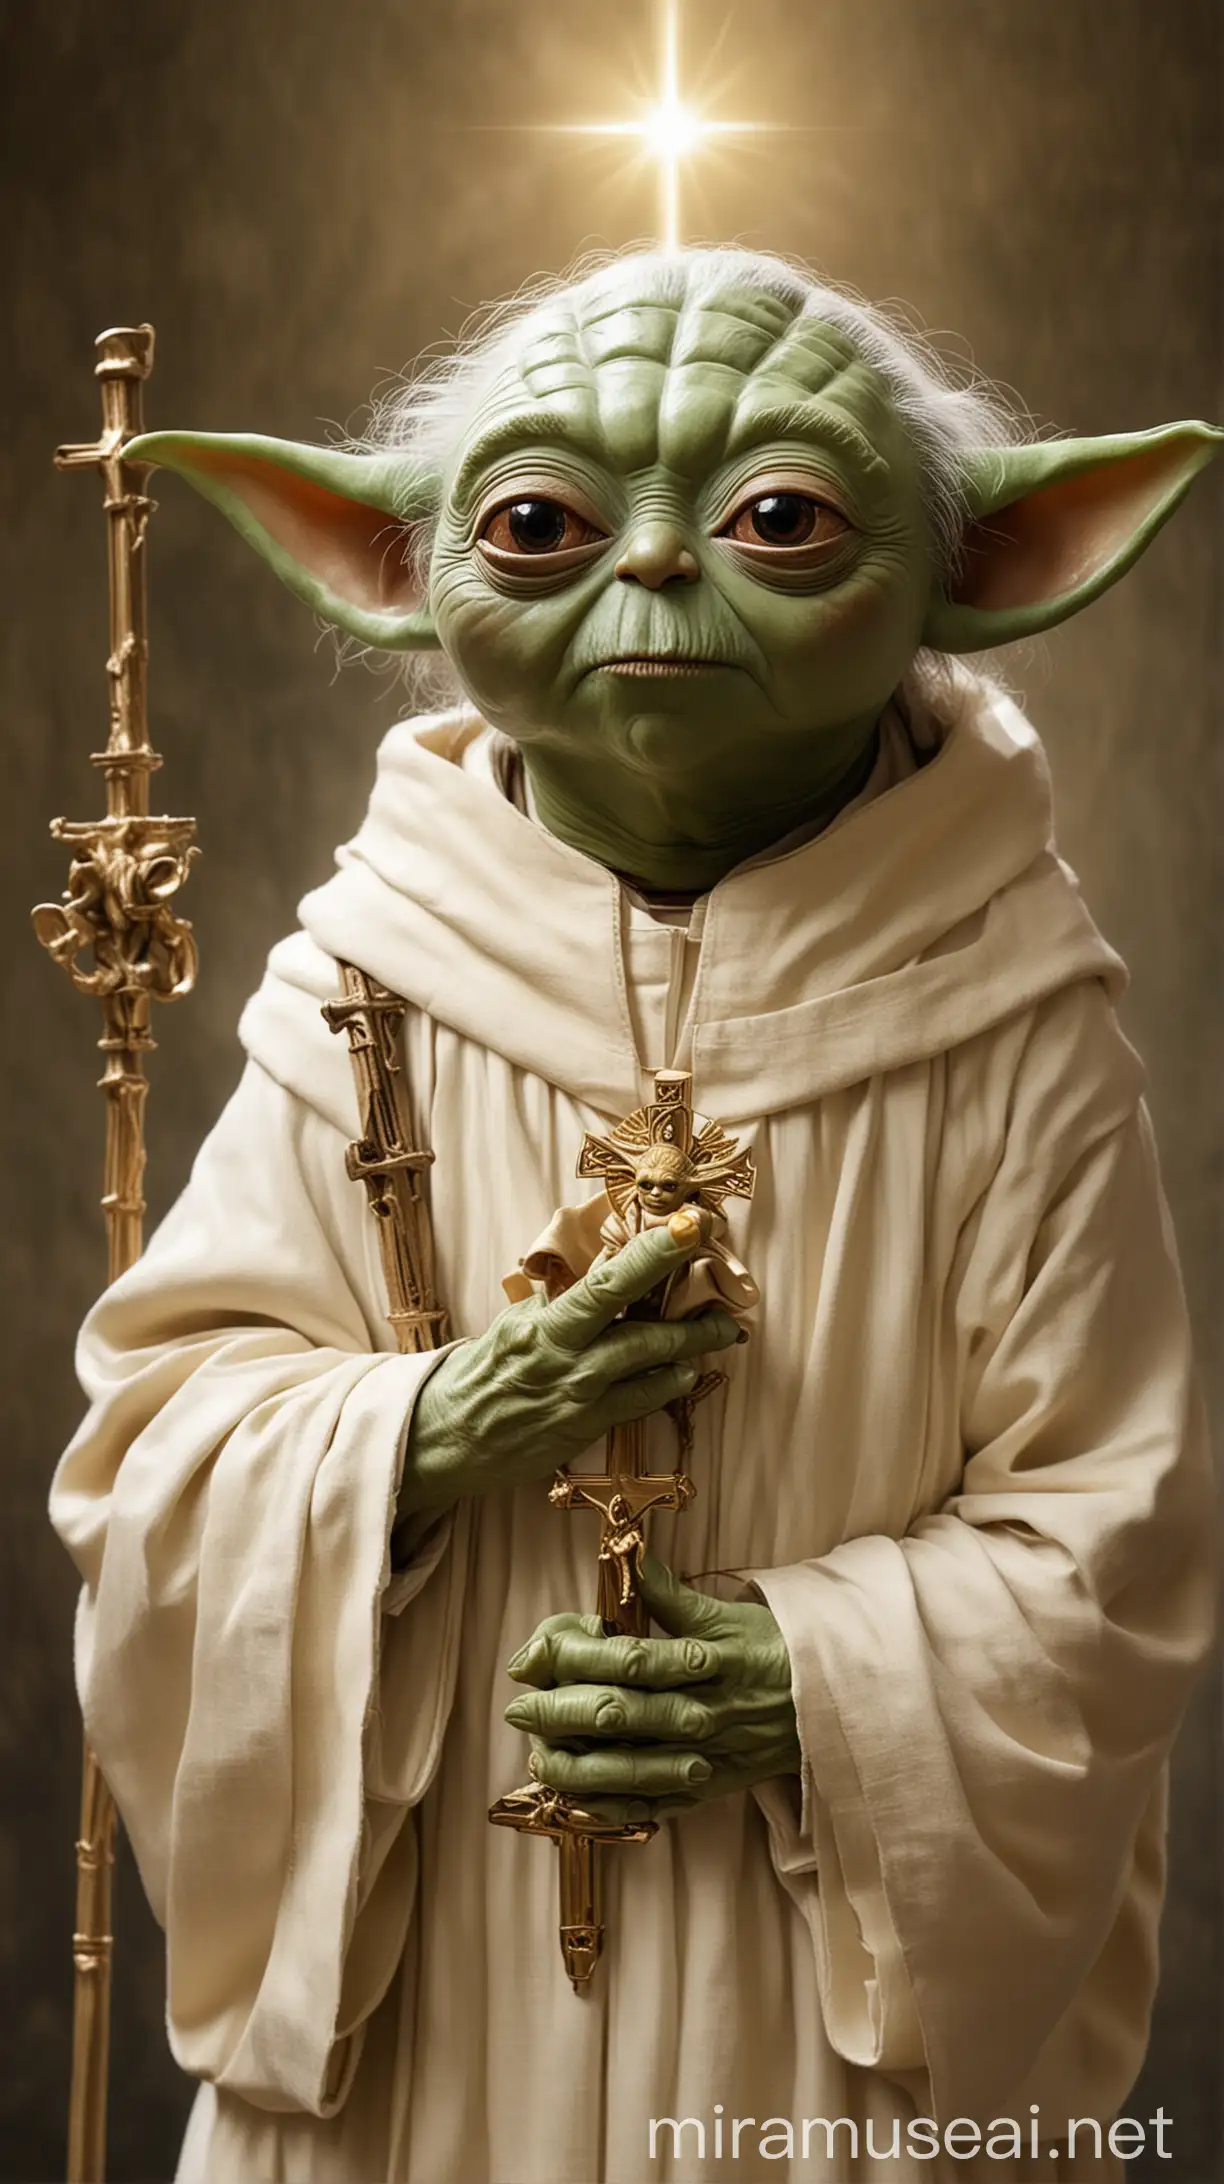 Yoda as a Catholic Saint.